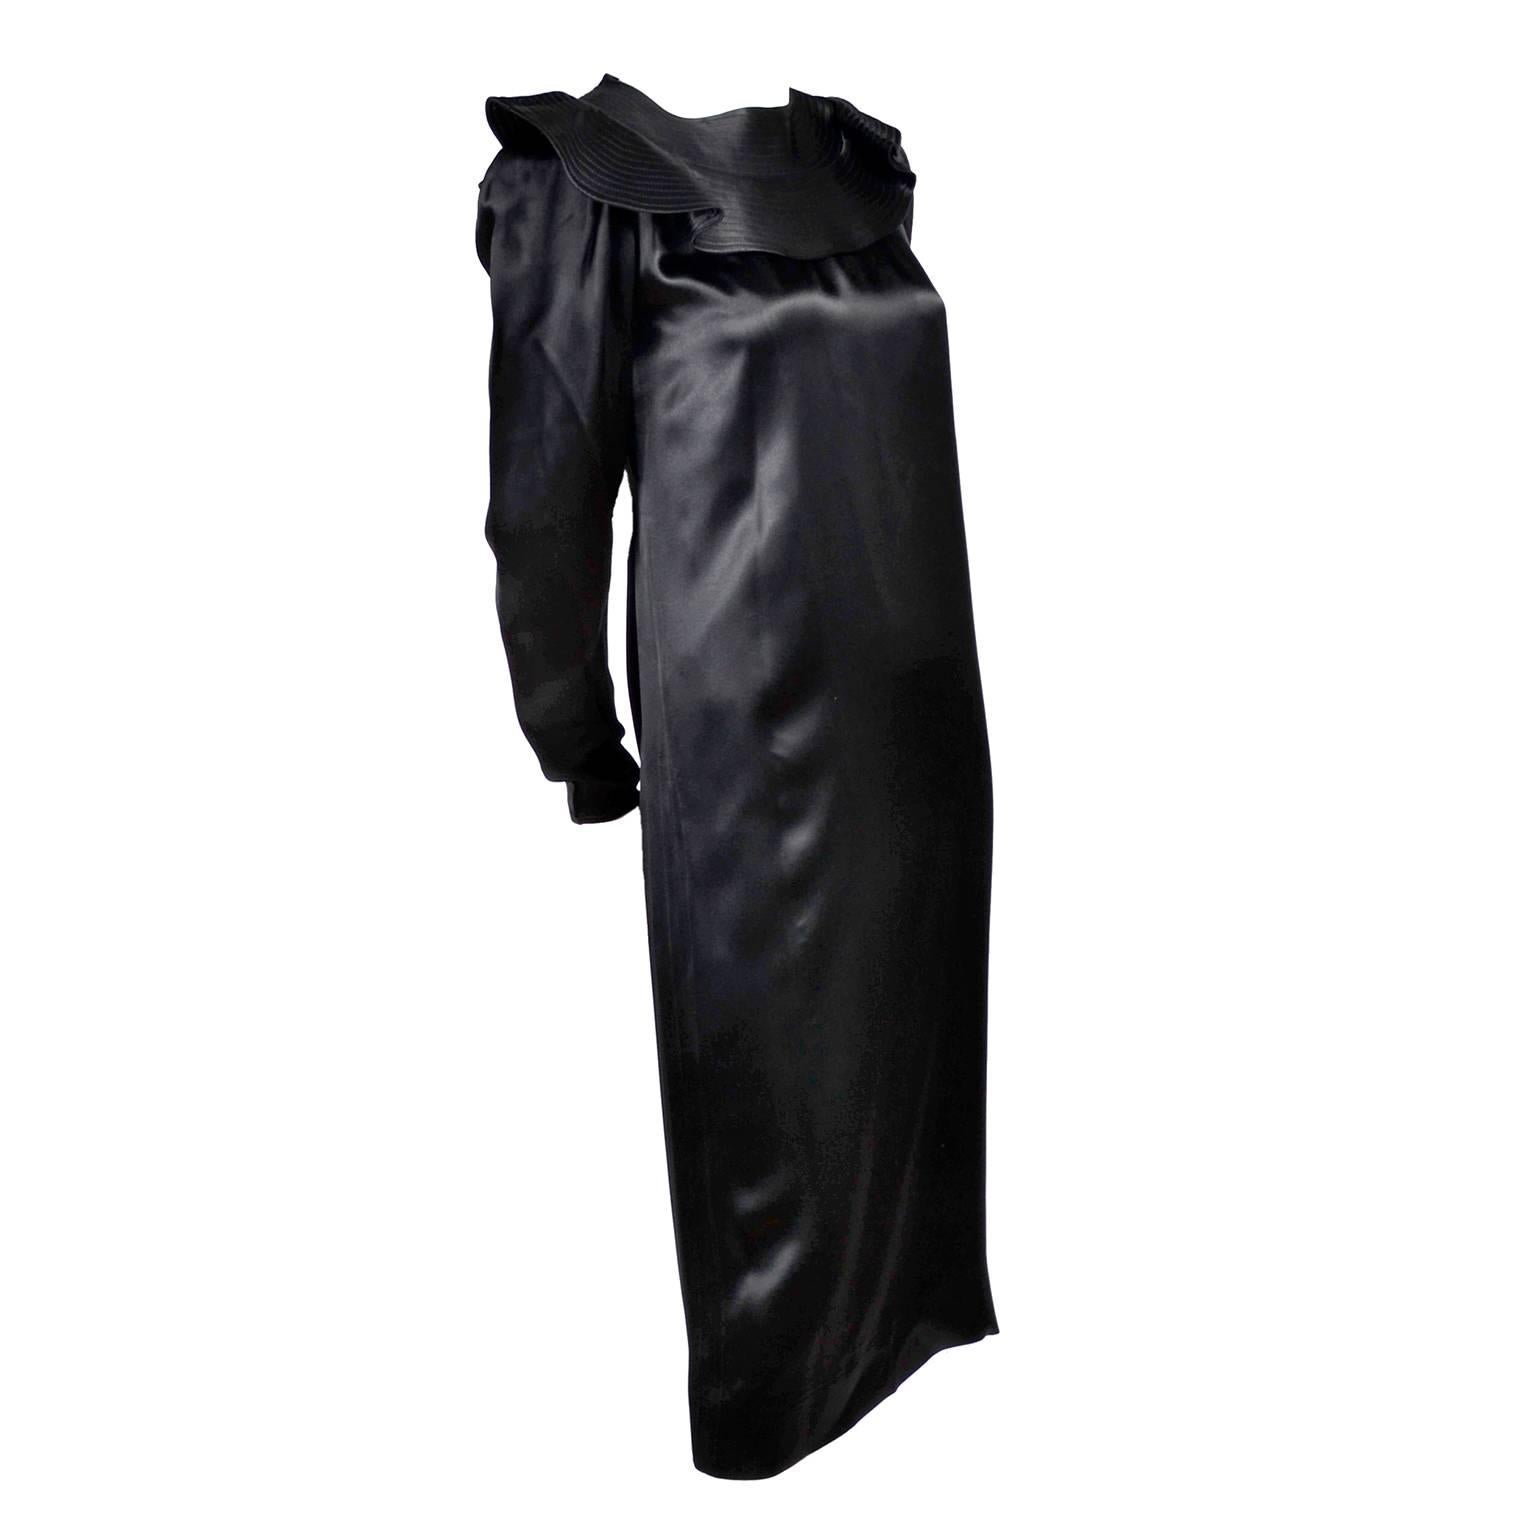 1970s Albert Nipon Vintage Dress in Black Satin With Ruff Collar